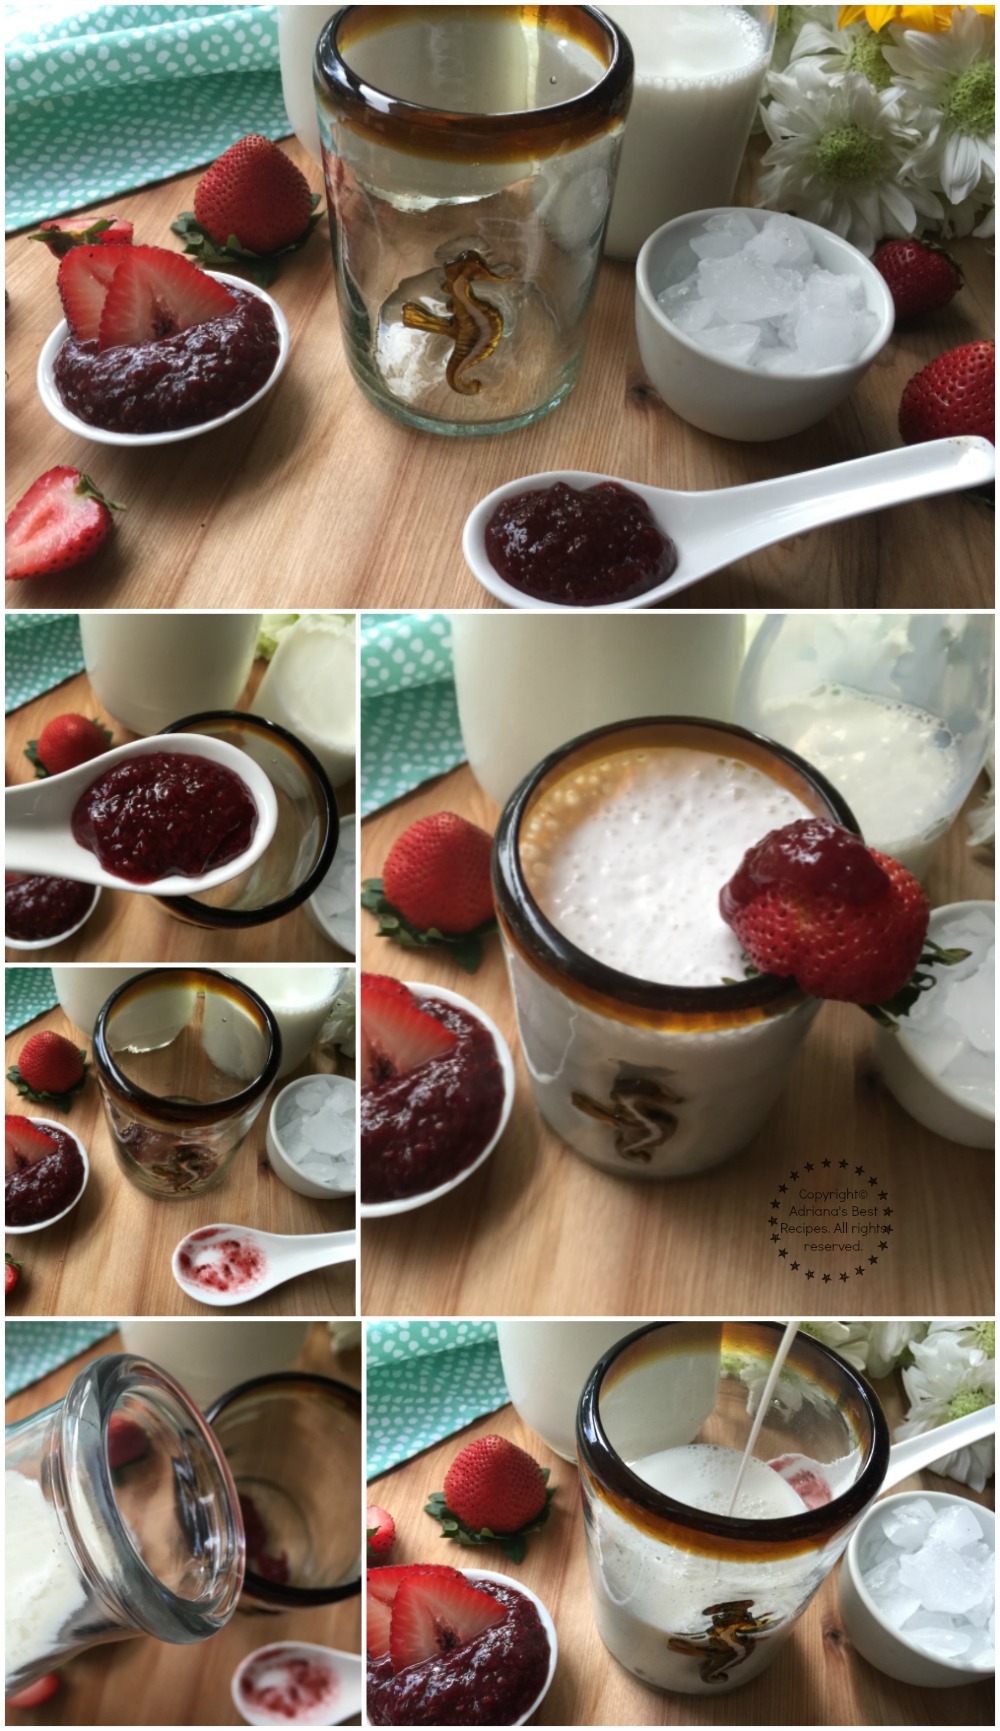 Making Milk with Strawberry Jam